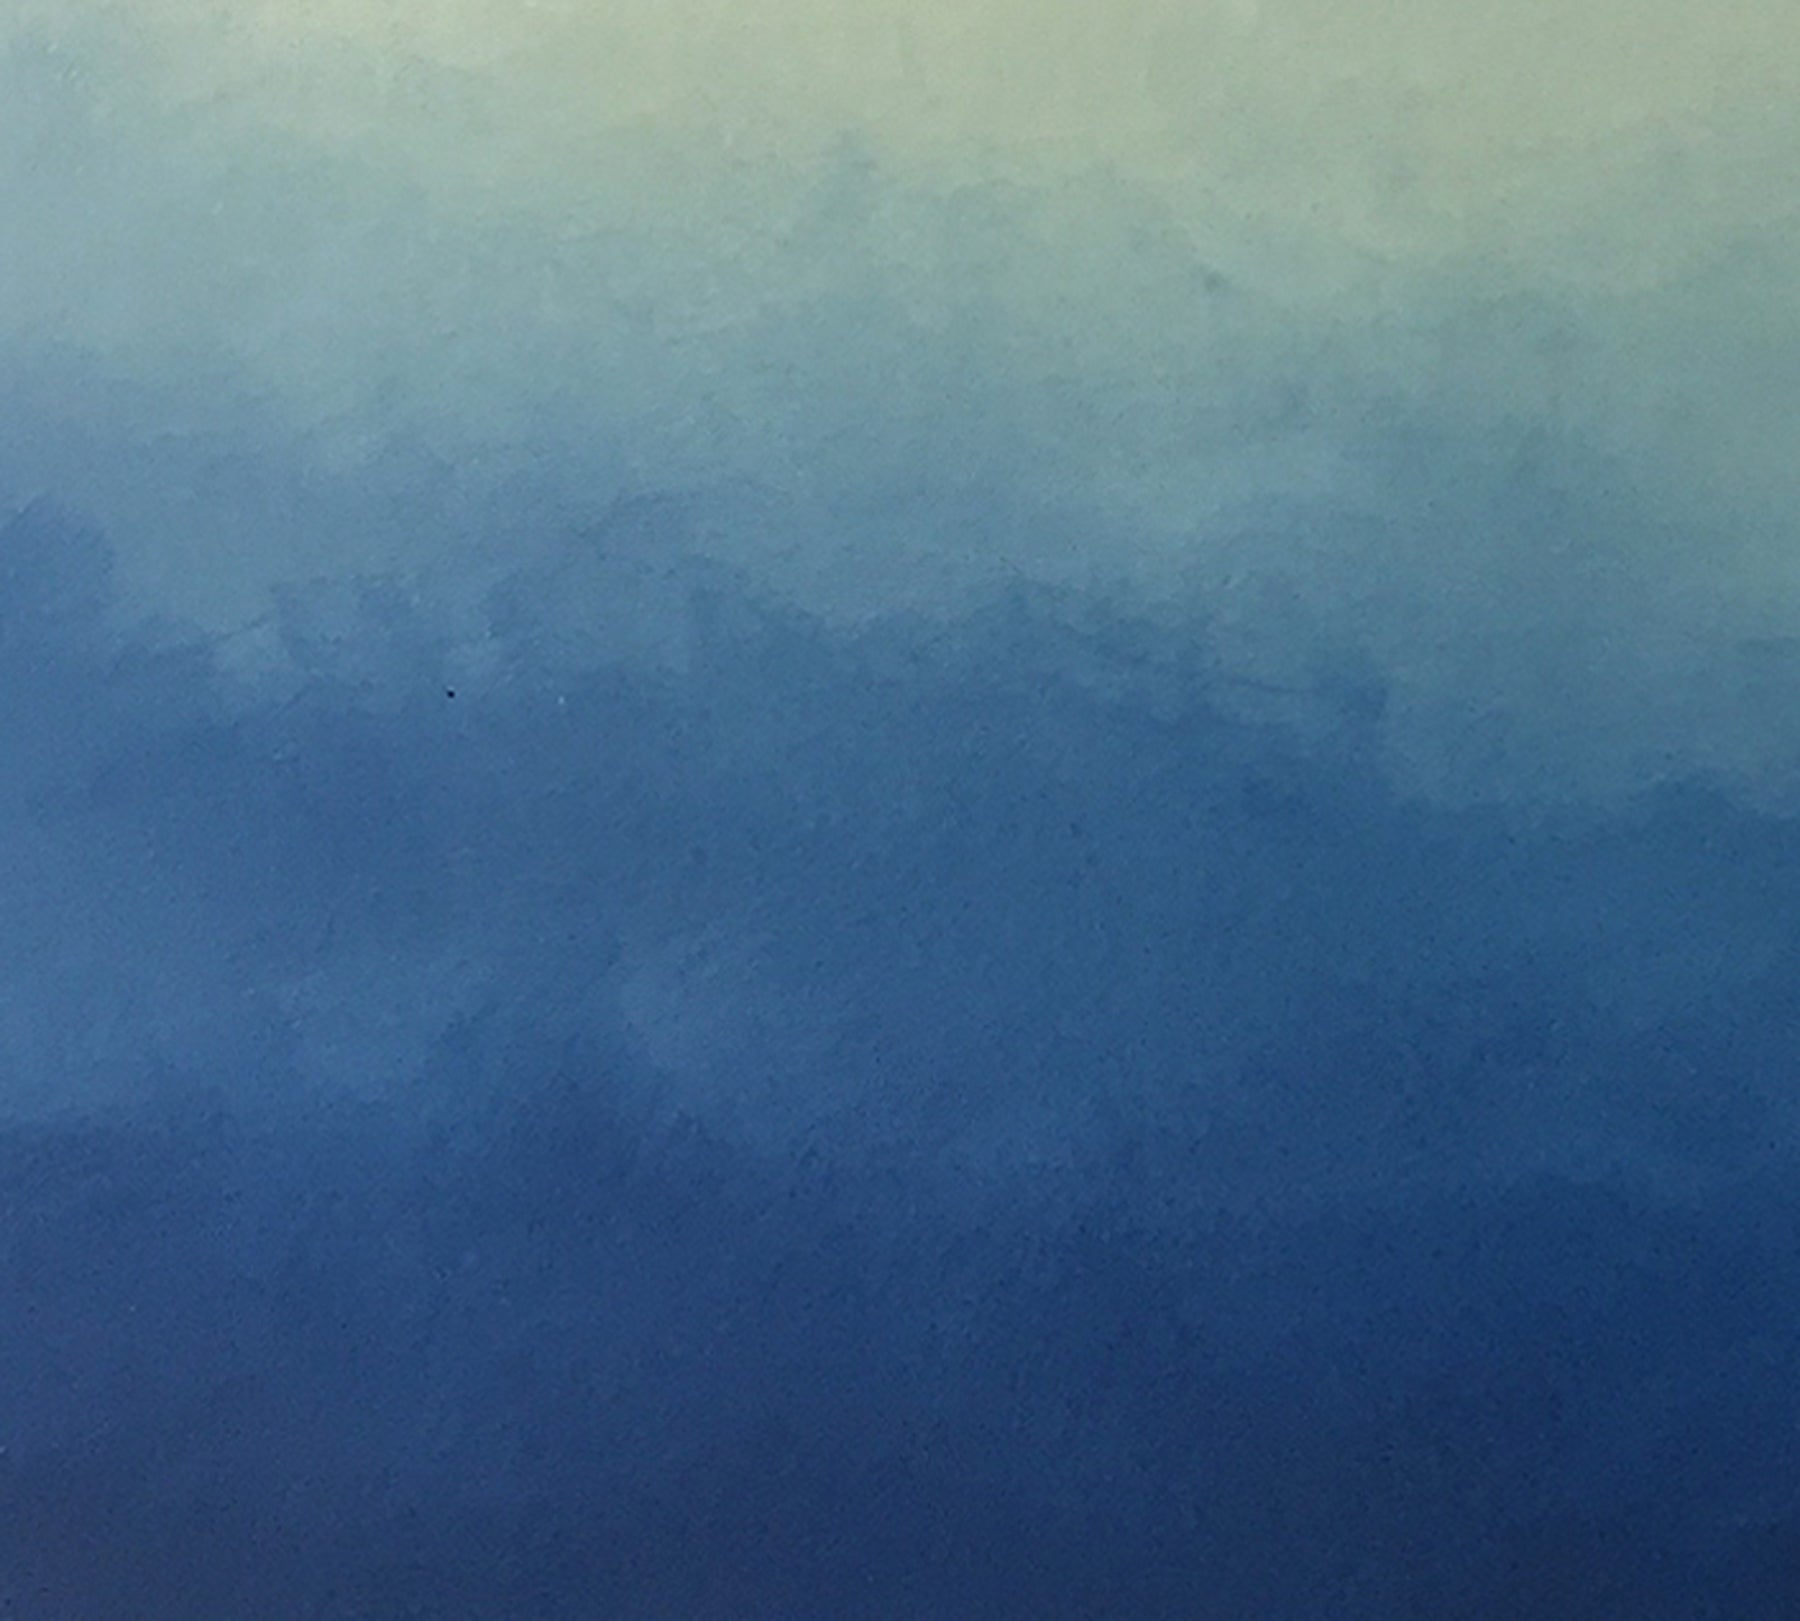 "Abstract Blue Ombré" I Ombré Painting